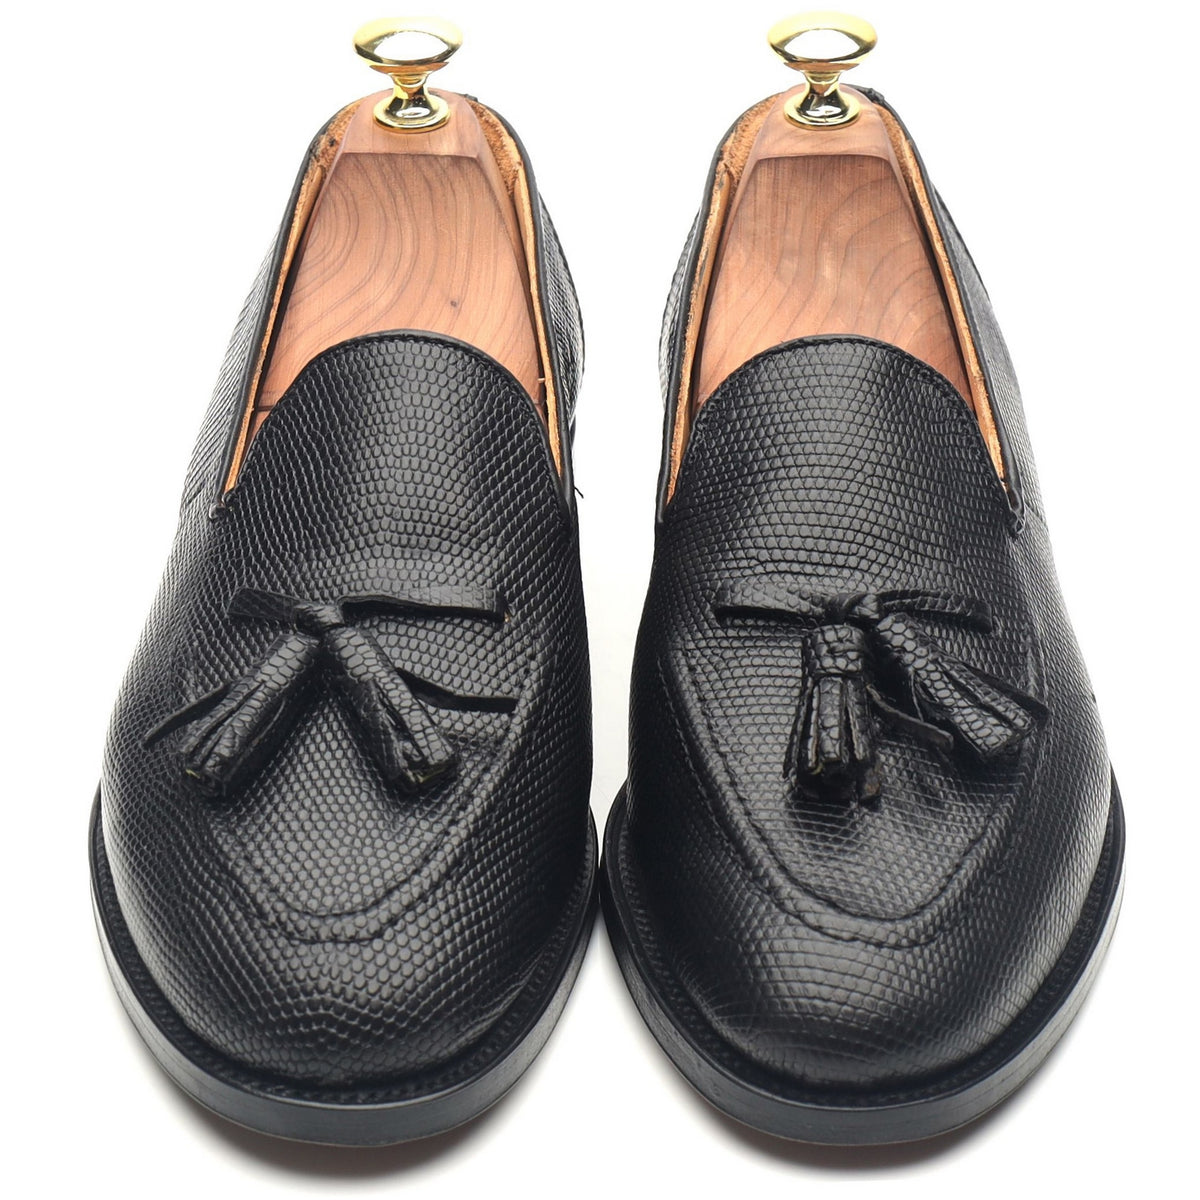 Black Leather Tassel Loafers UK 7